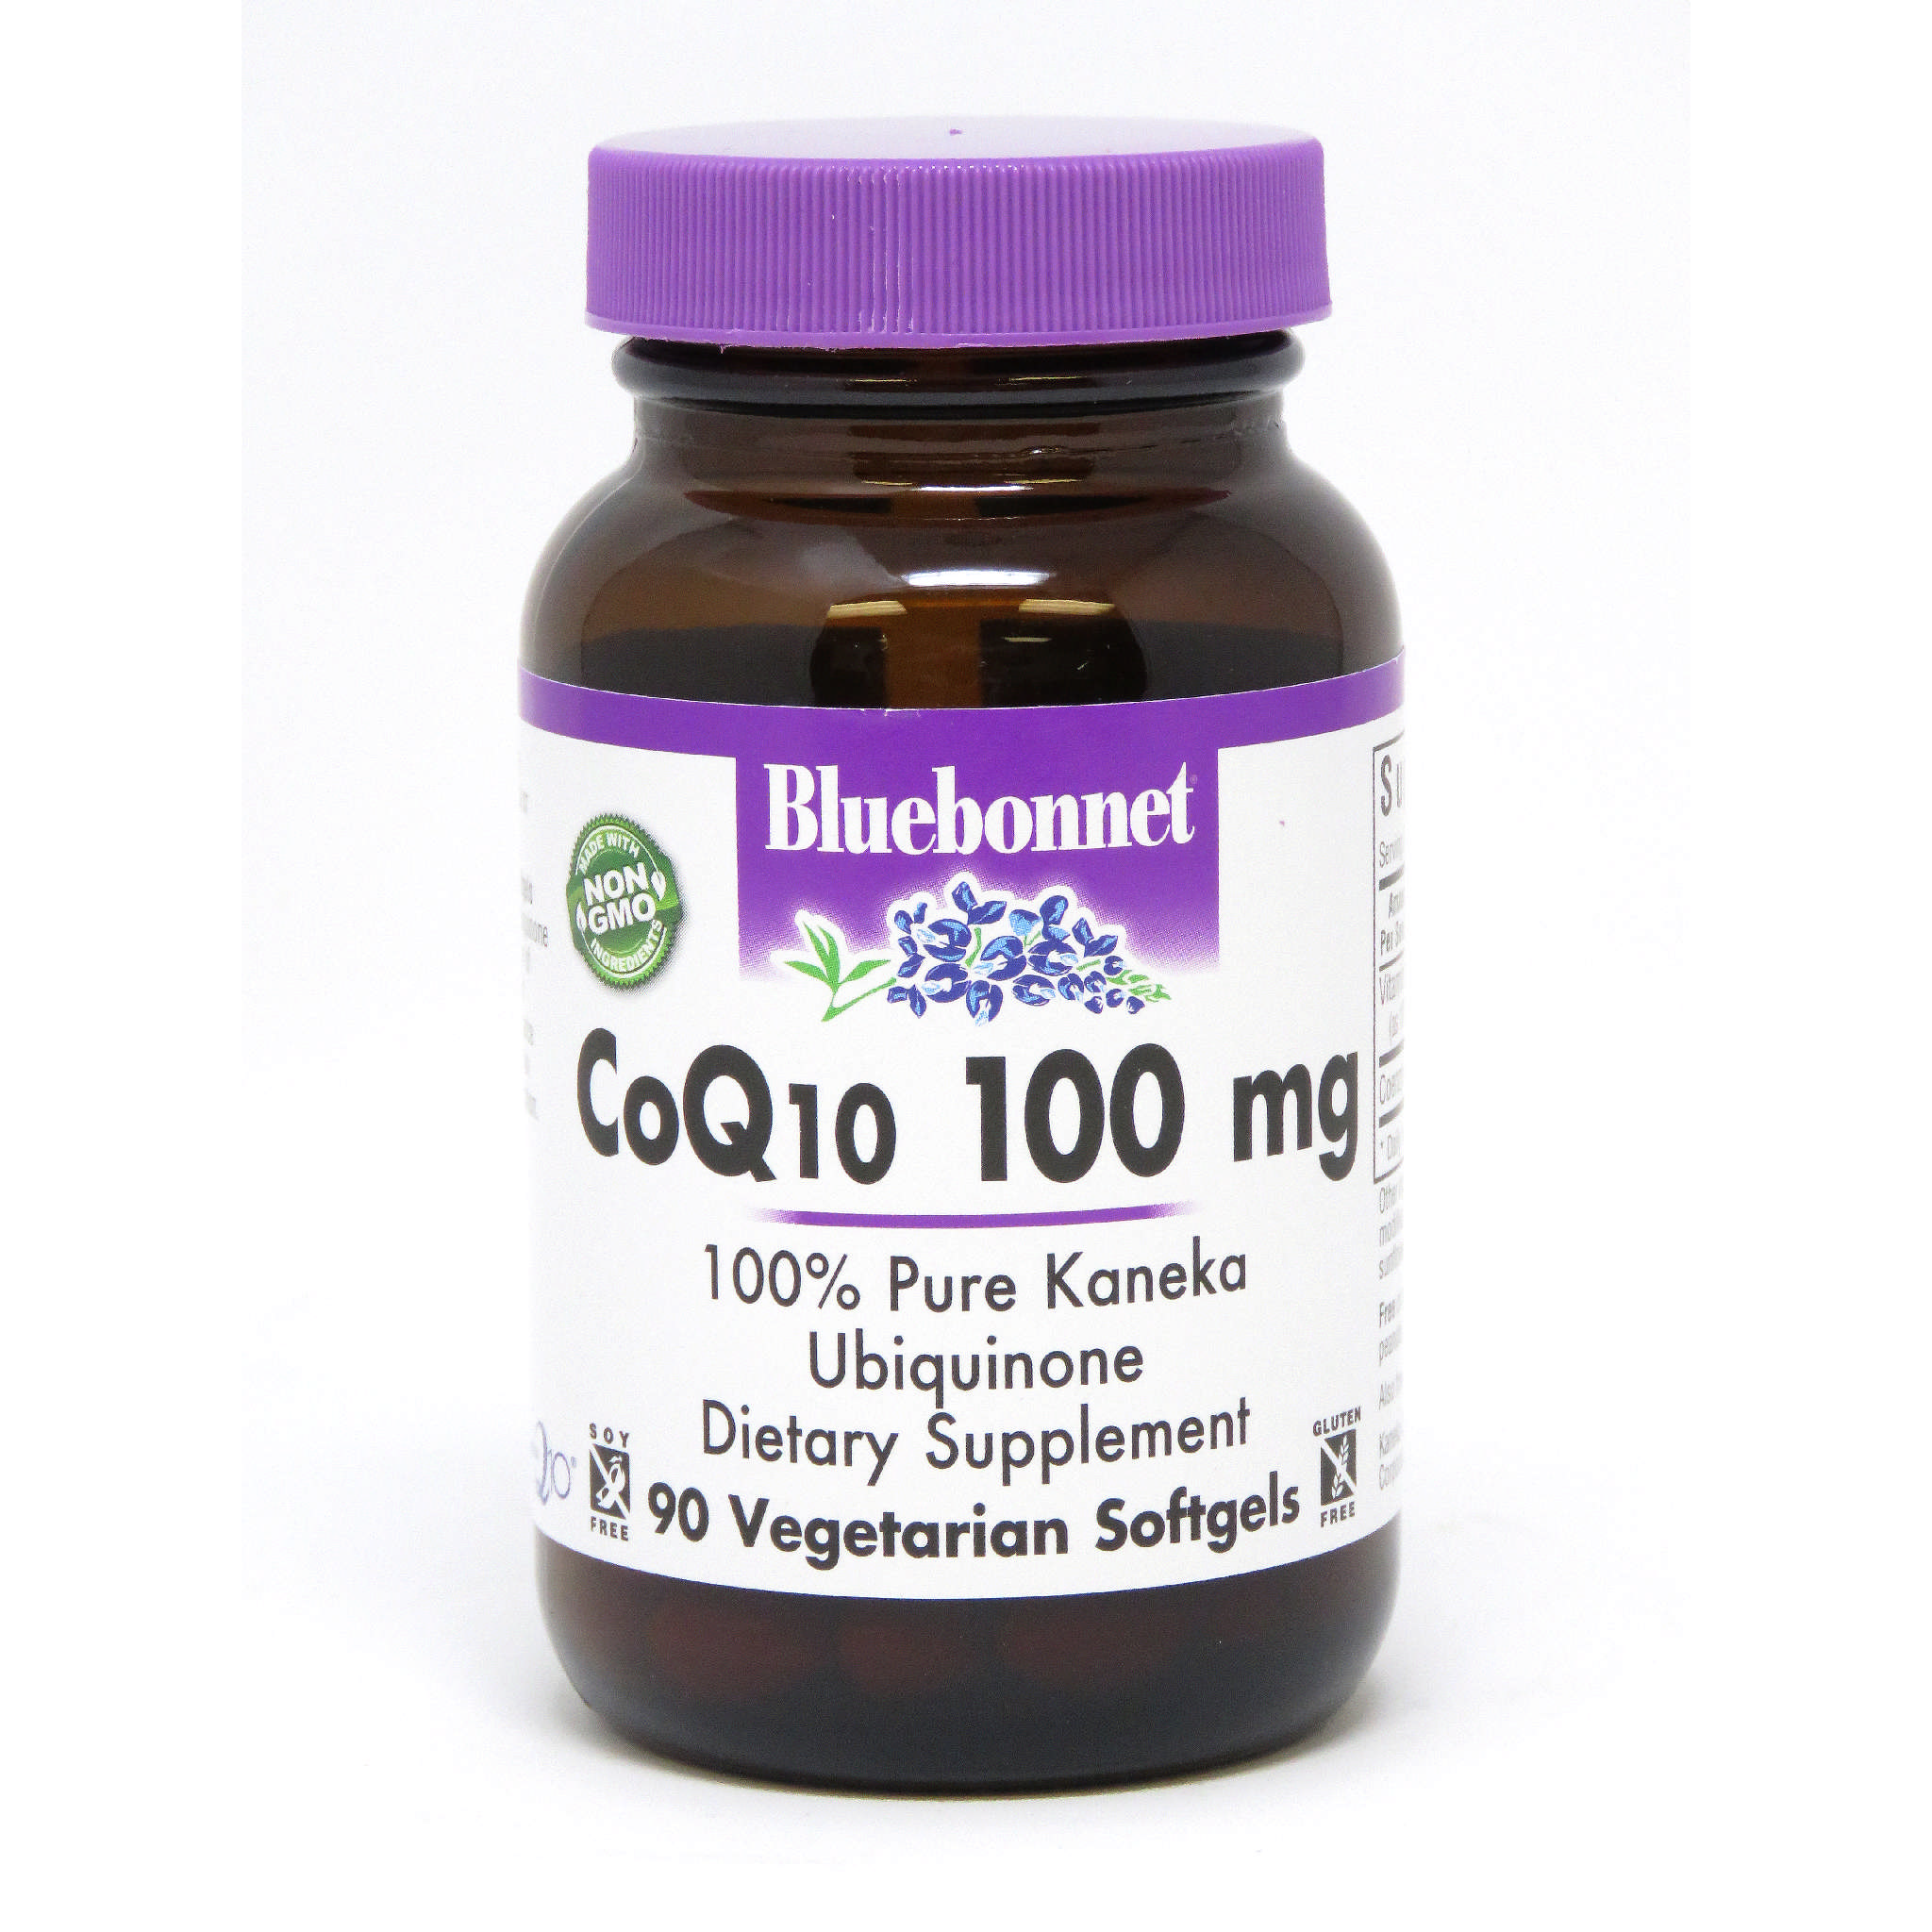 Bluebonnet - Coq10 100 mg